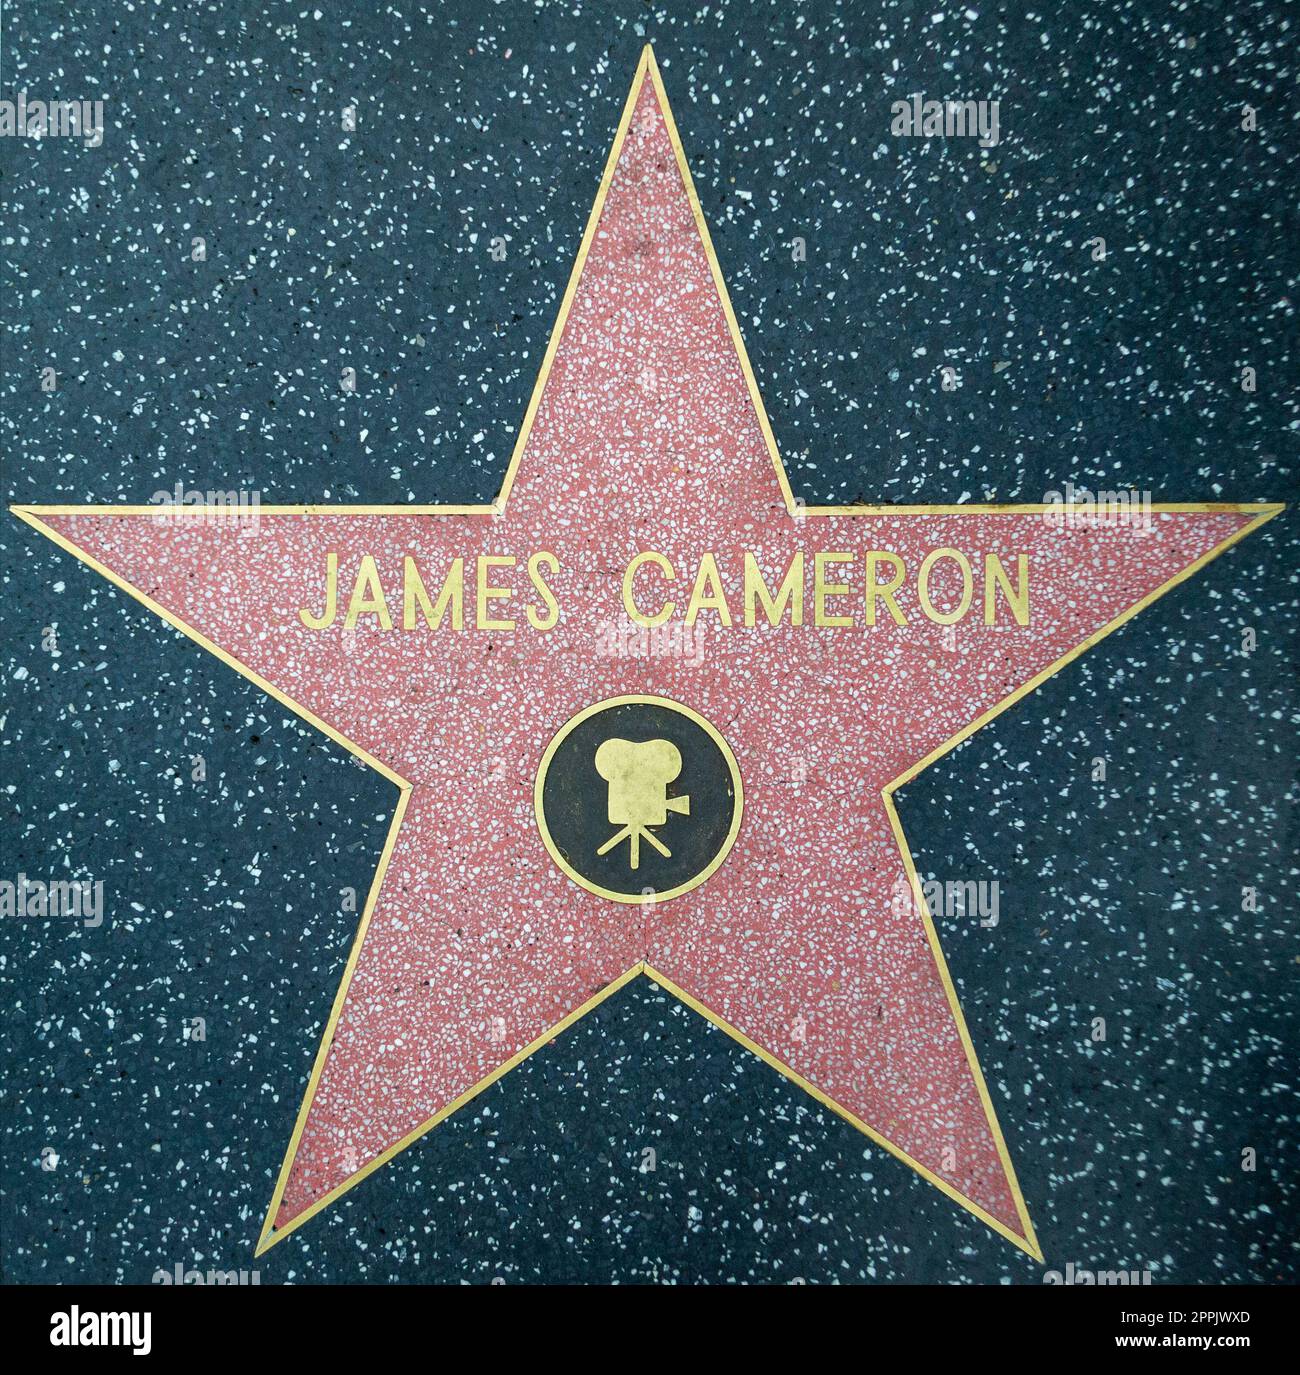 James Cameron auf dem Walk of Fame, hollywood Boulevard in Los Angeles, USA. Stockfoto